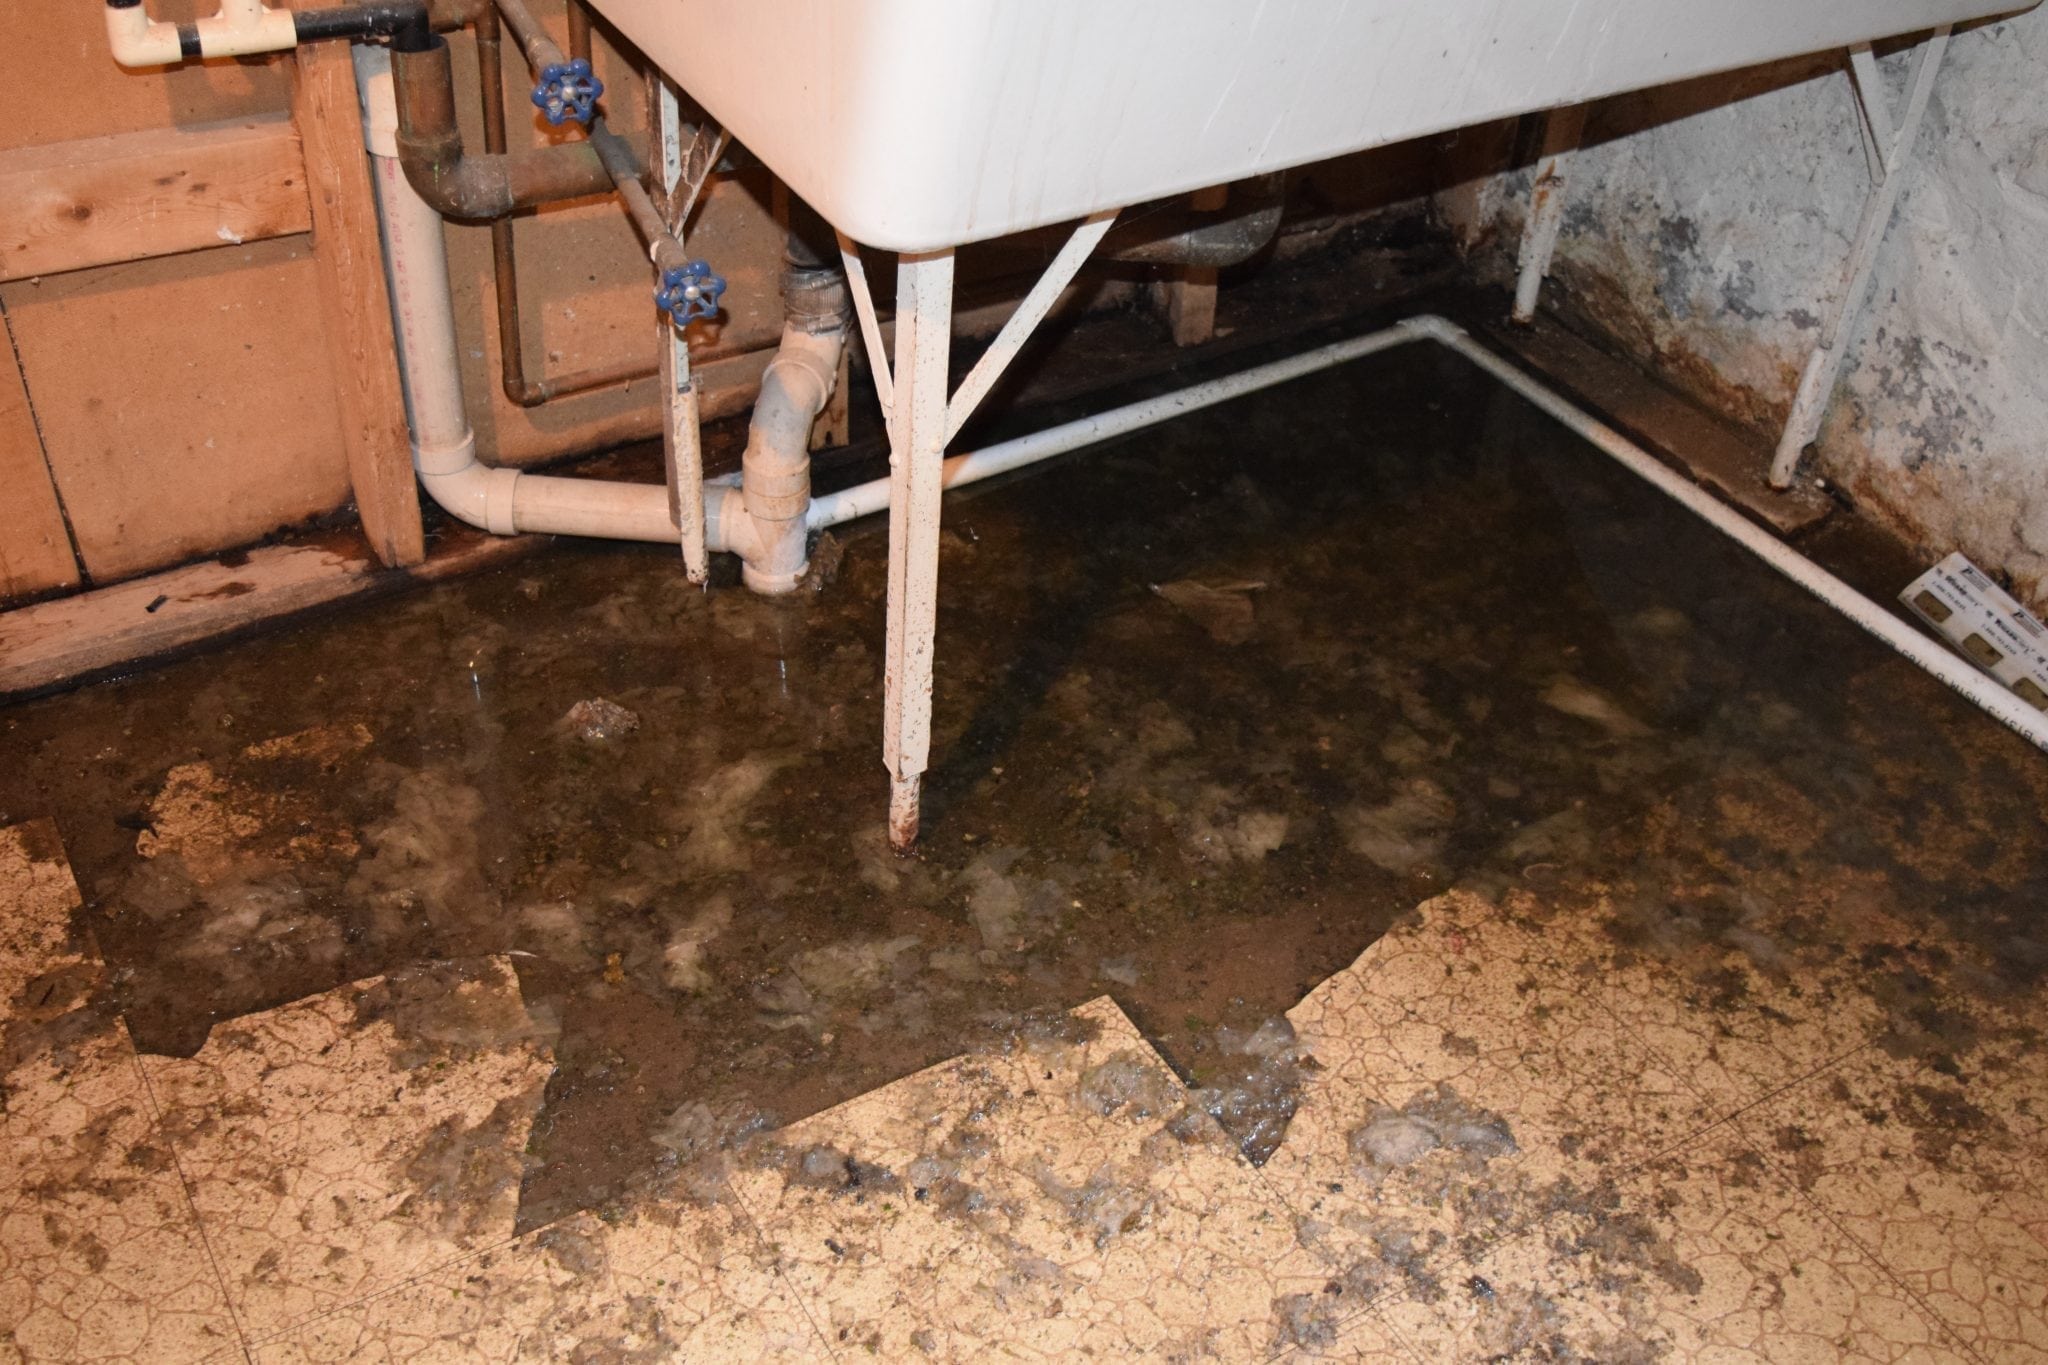 sewage backup in kitchen sink